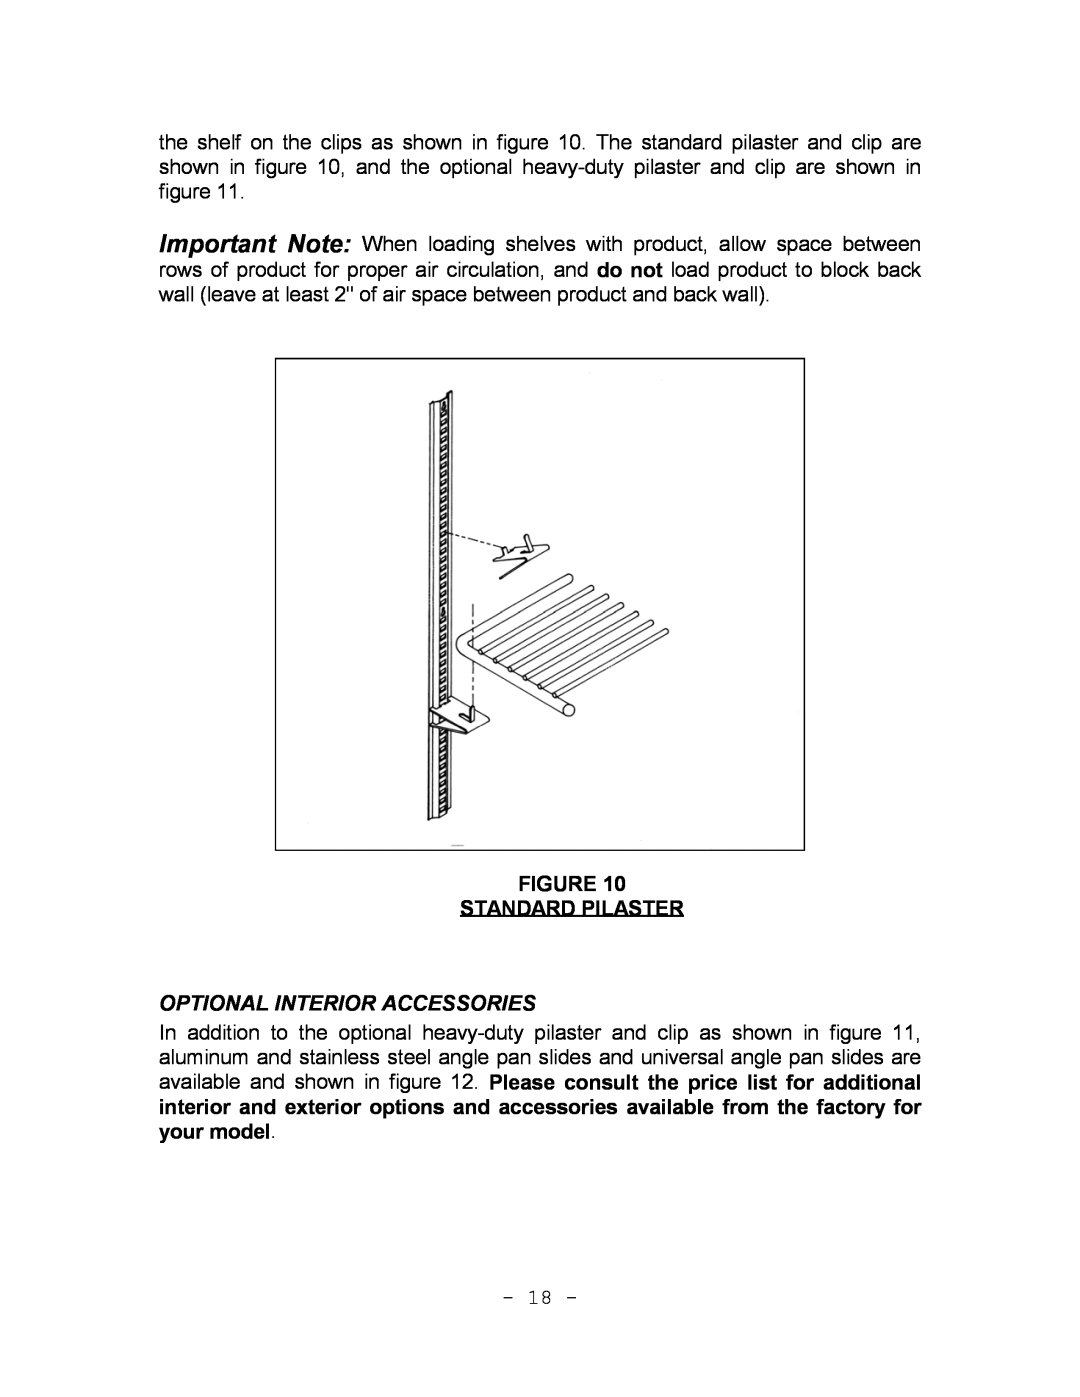 Continental Refrigerator Refrigerators and Freezers Figure Standard Pilaster, Optional Interior Accessories 